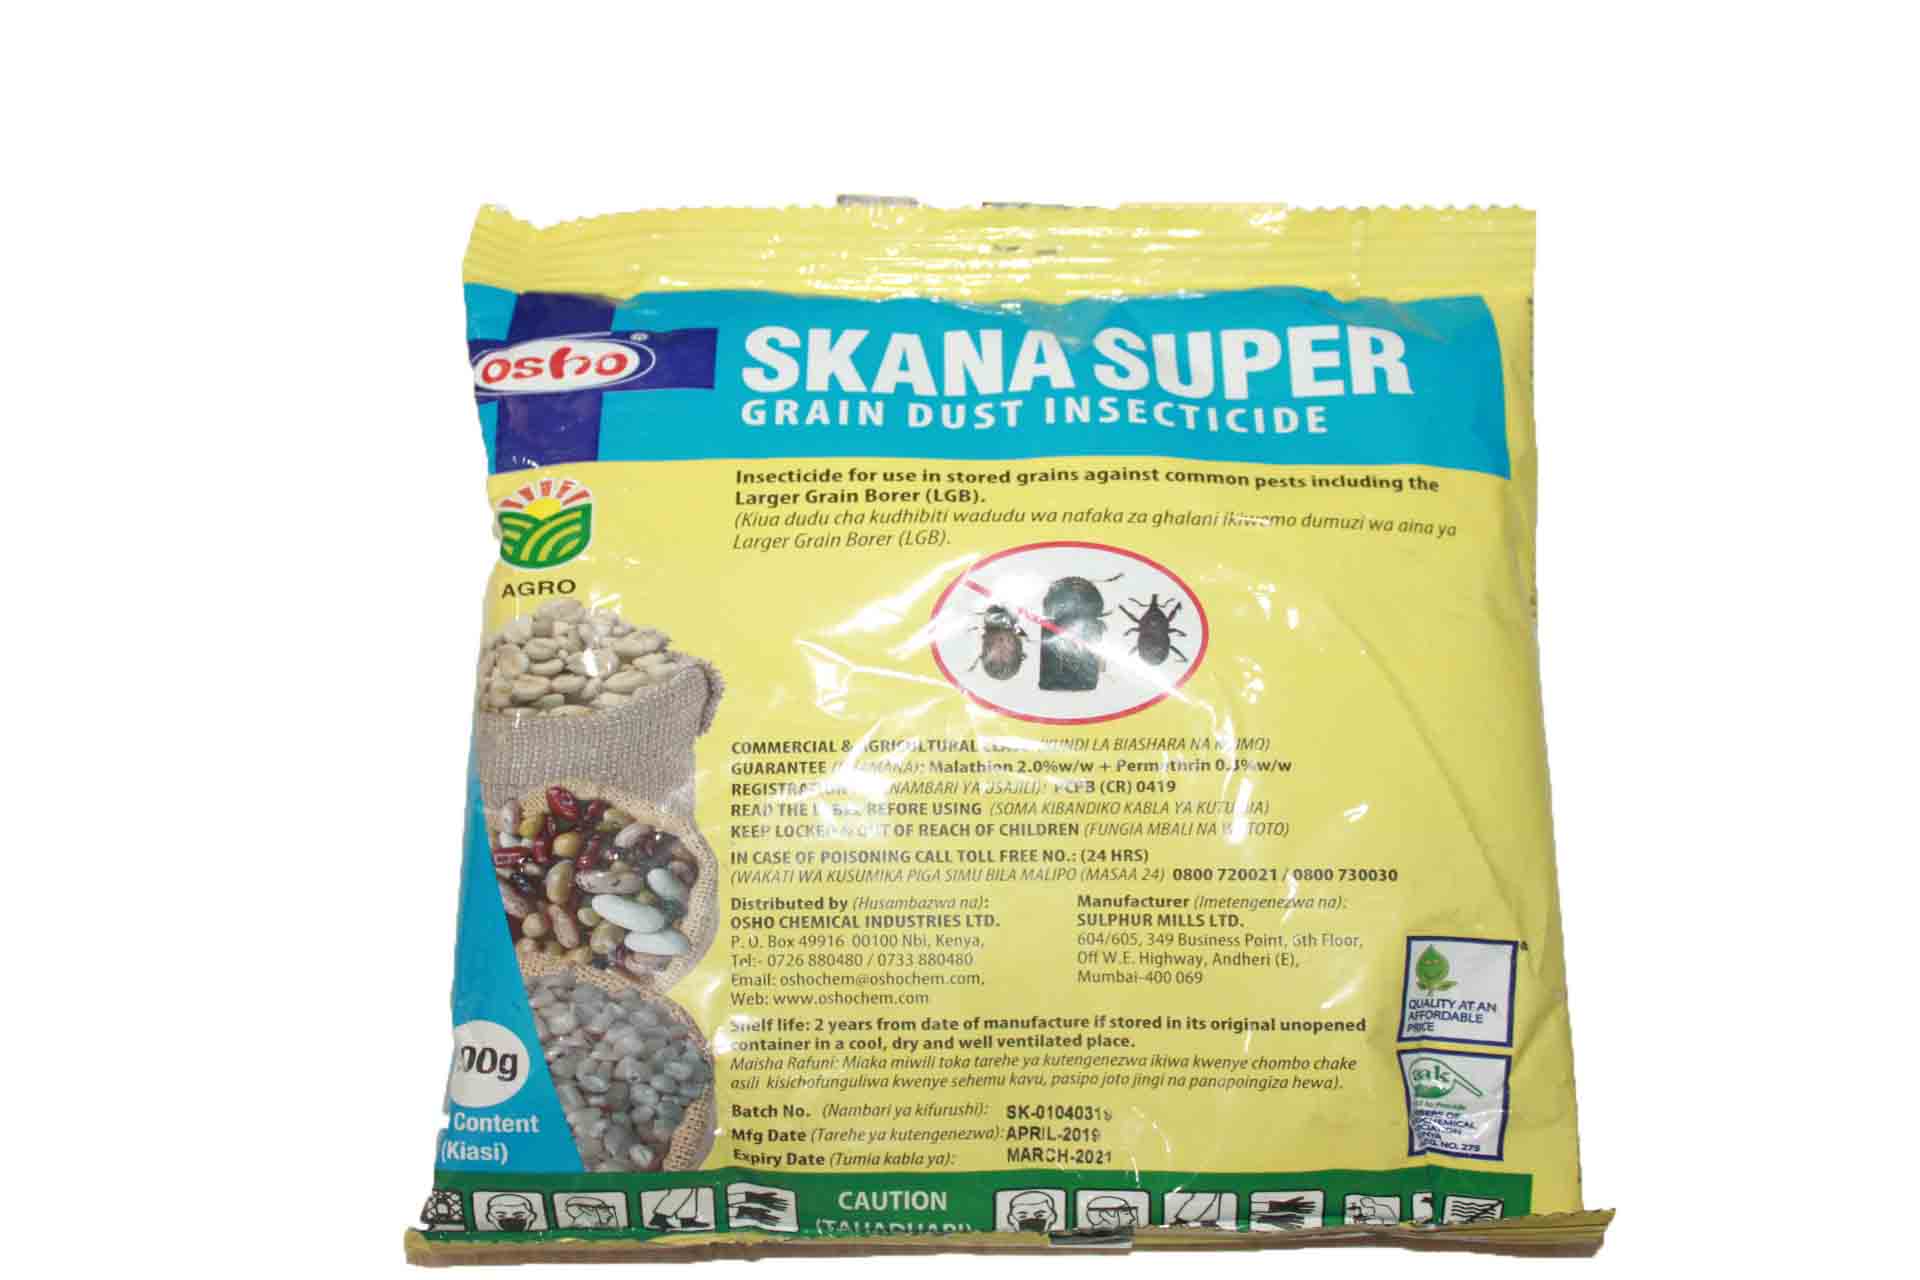 Scana Super, Grain Dust Insecticide